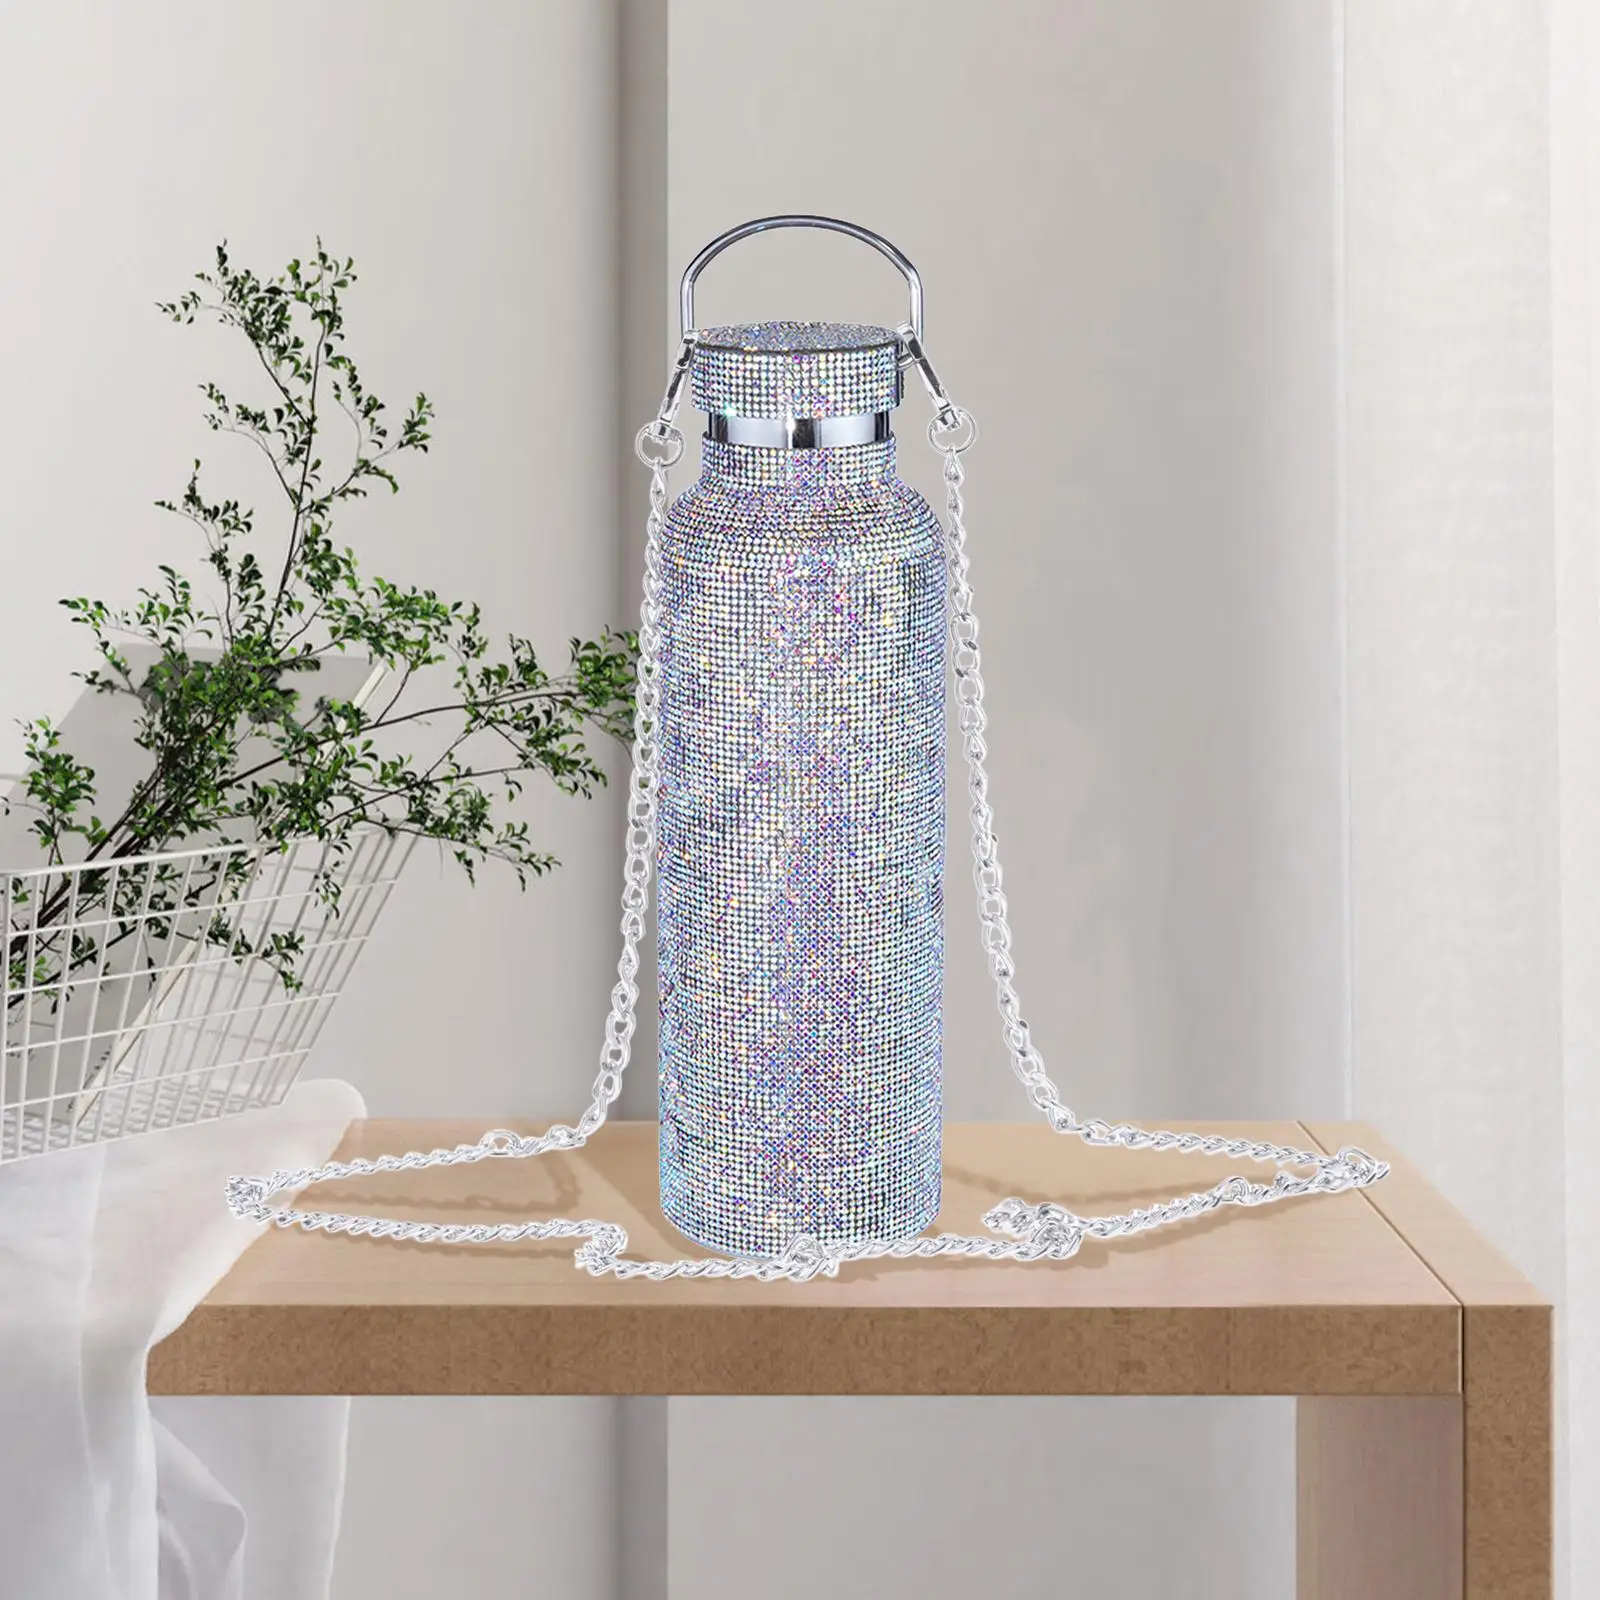 Creative Diamond Water Bottle with Chain 500ml/17oz Portable Glitter Vacuum Flask Mug Insulation Bottle for Women Diamond Kettle